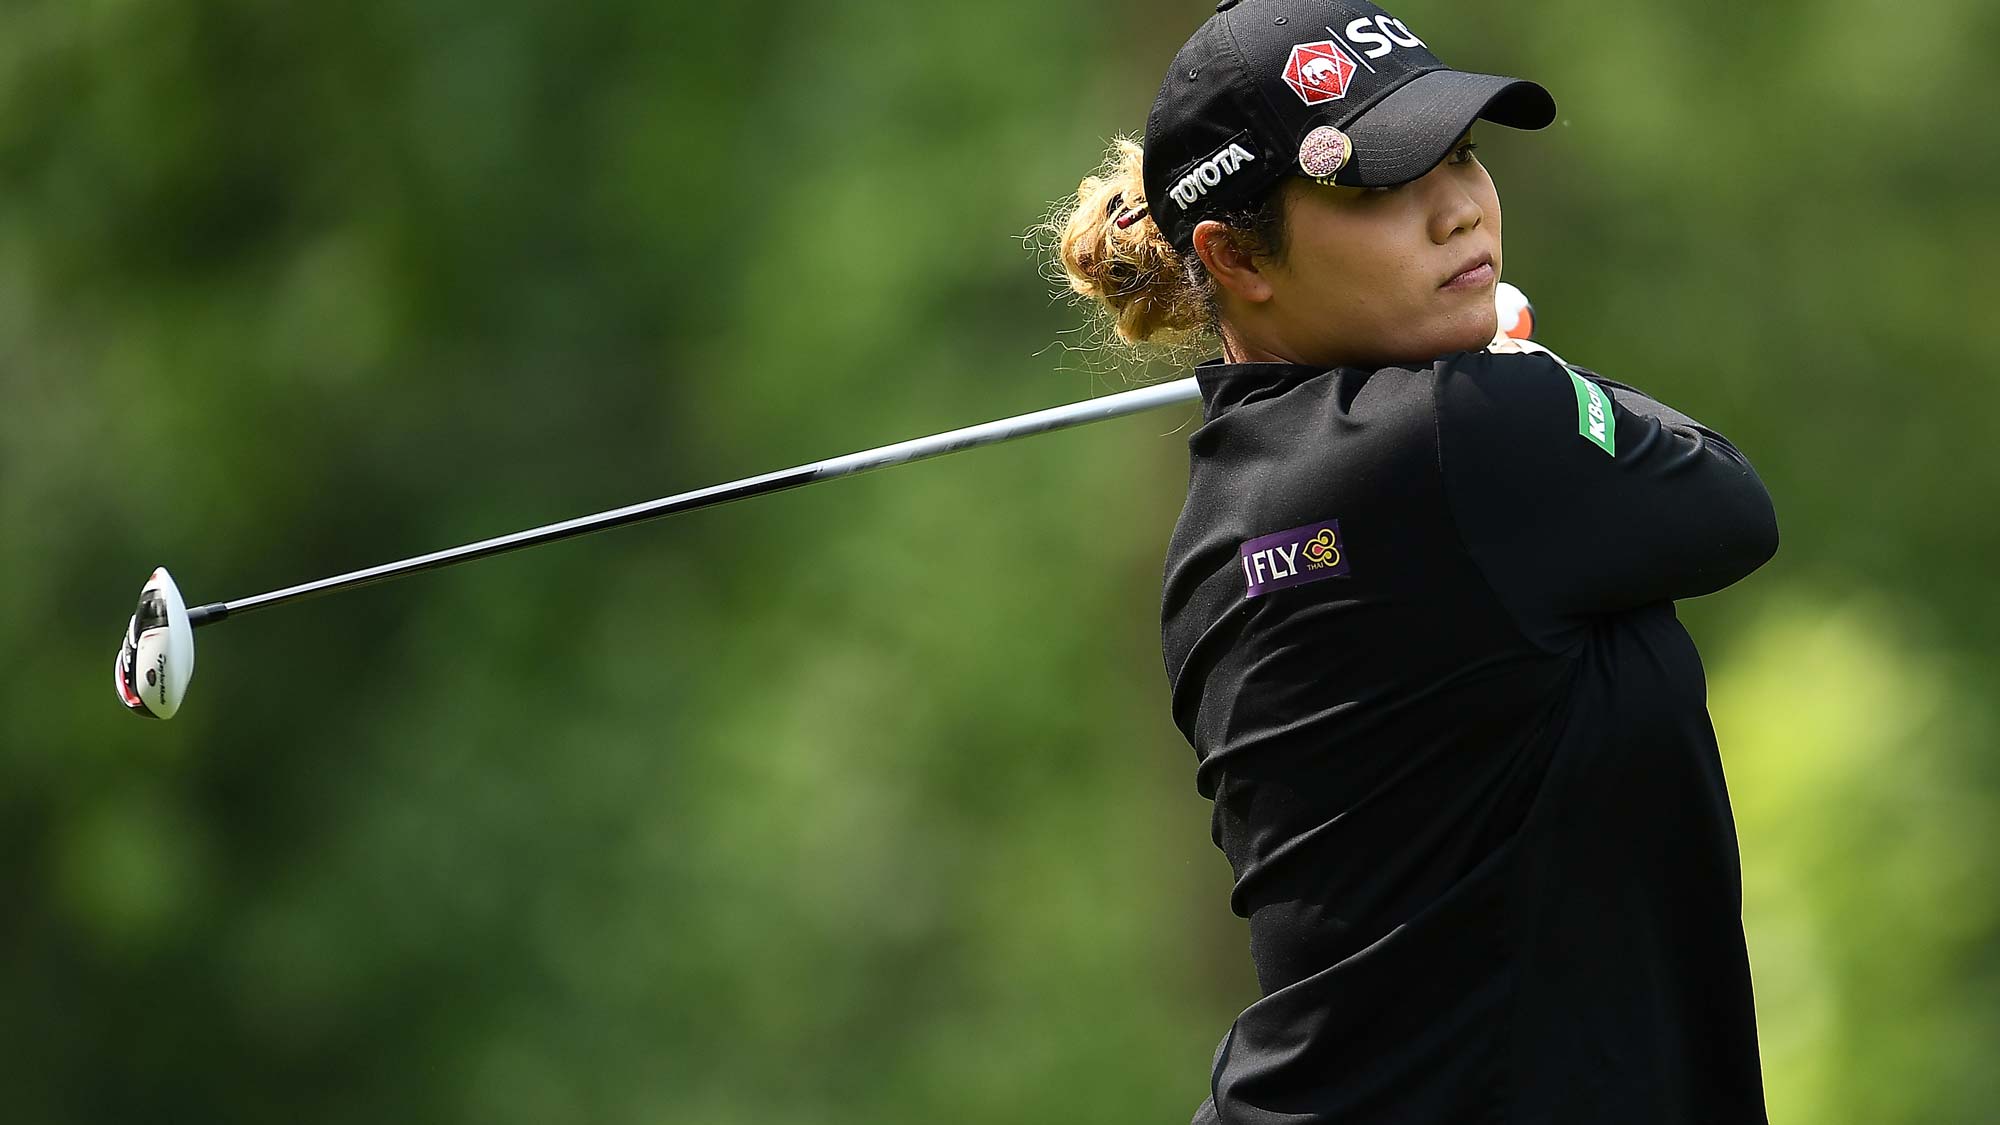 Ariya Jutanugarn of Thailand hits her tee shot on the third hole during the final round of the Thornberry Creek LPGA Classic